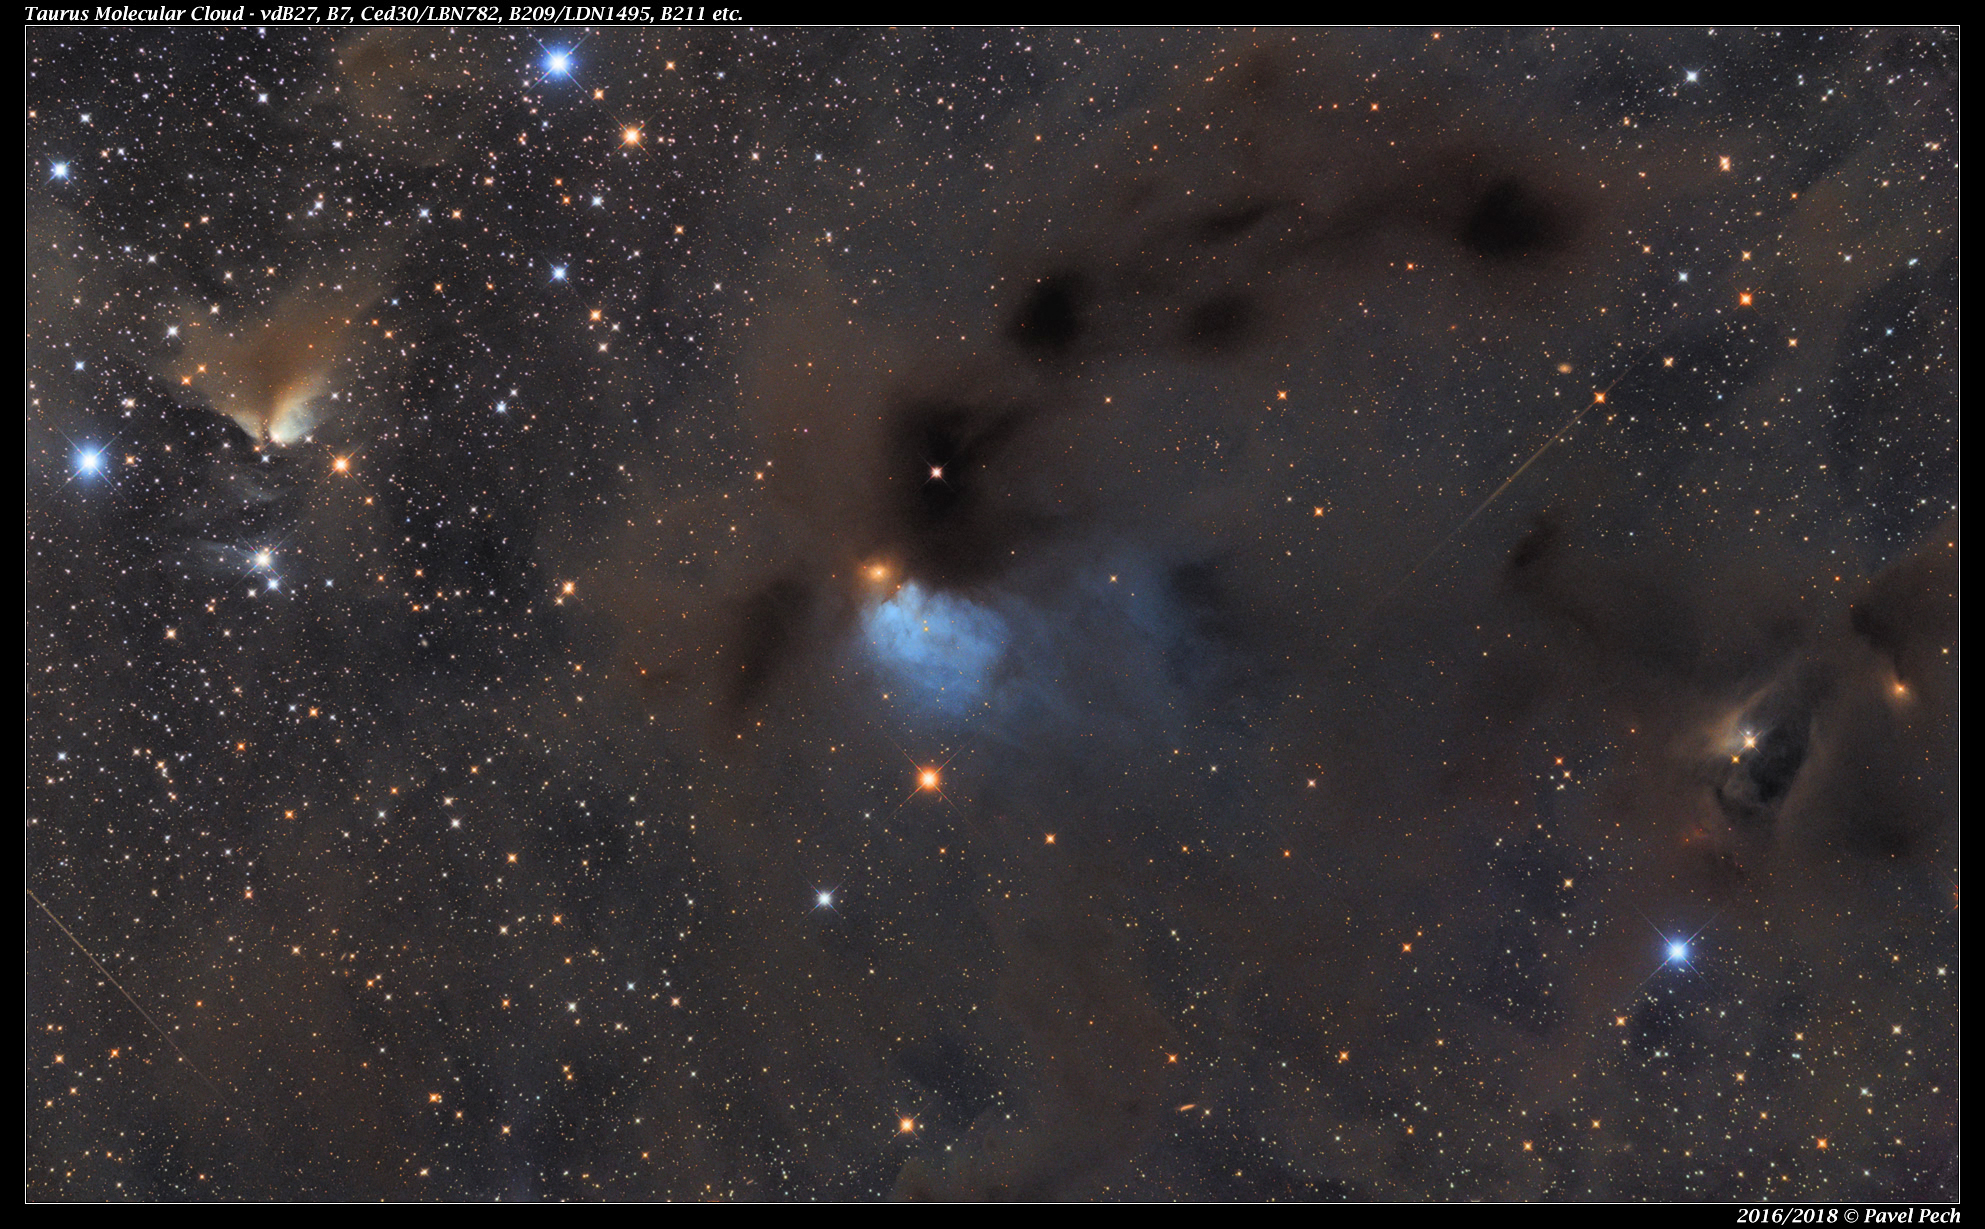 Taurus Molecular Cloud - vdB27, B7, Ced30/LBN782, B209/LDN1495